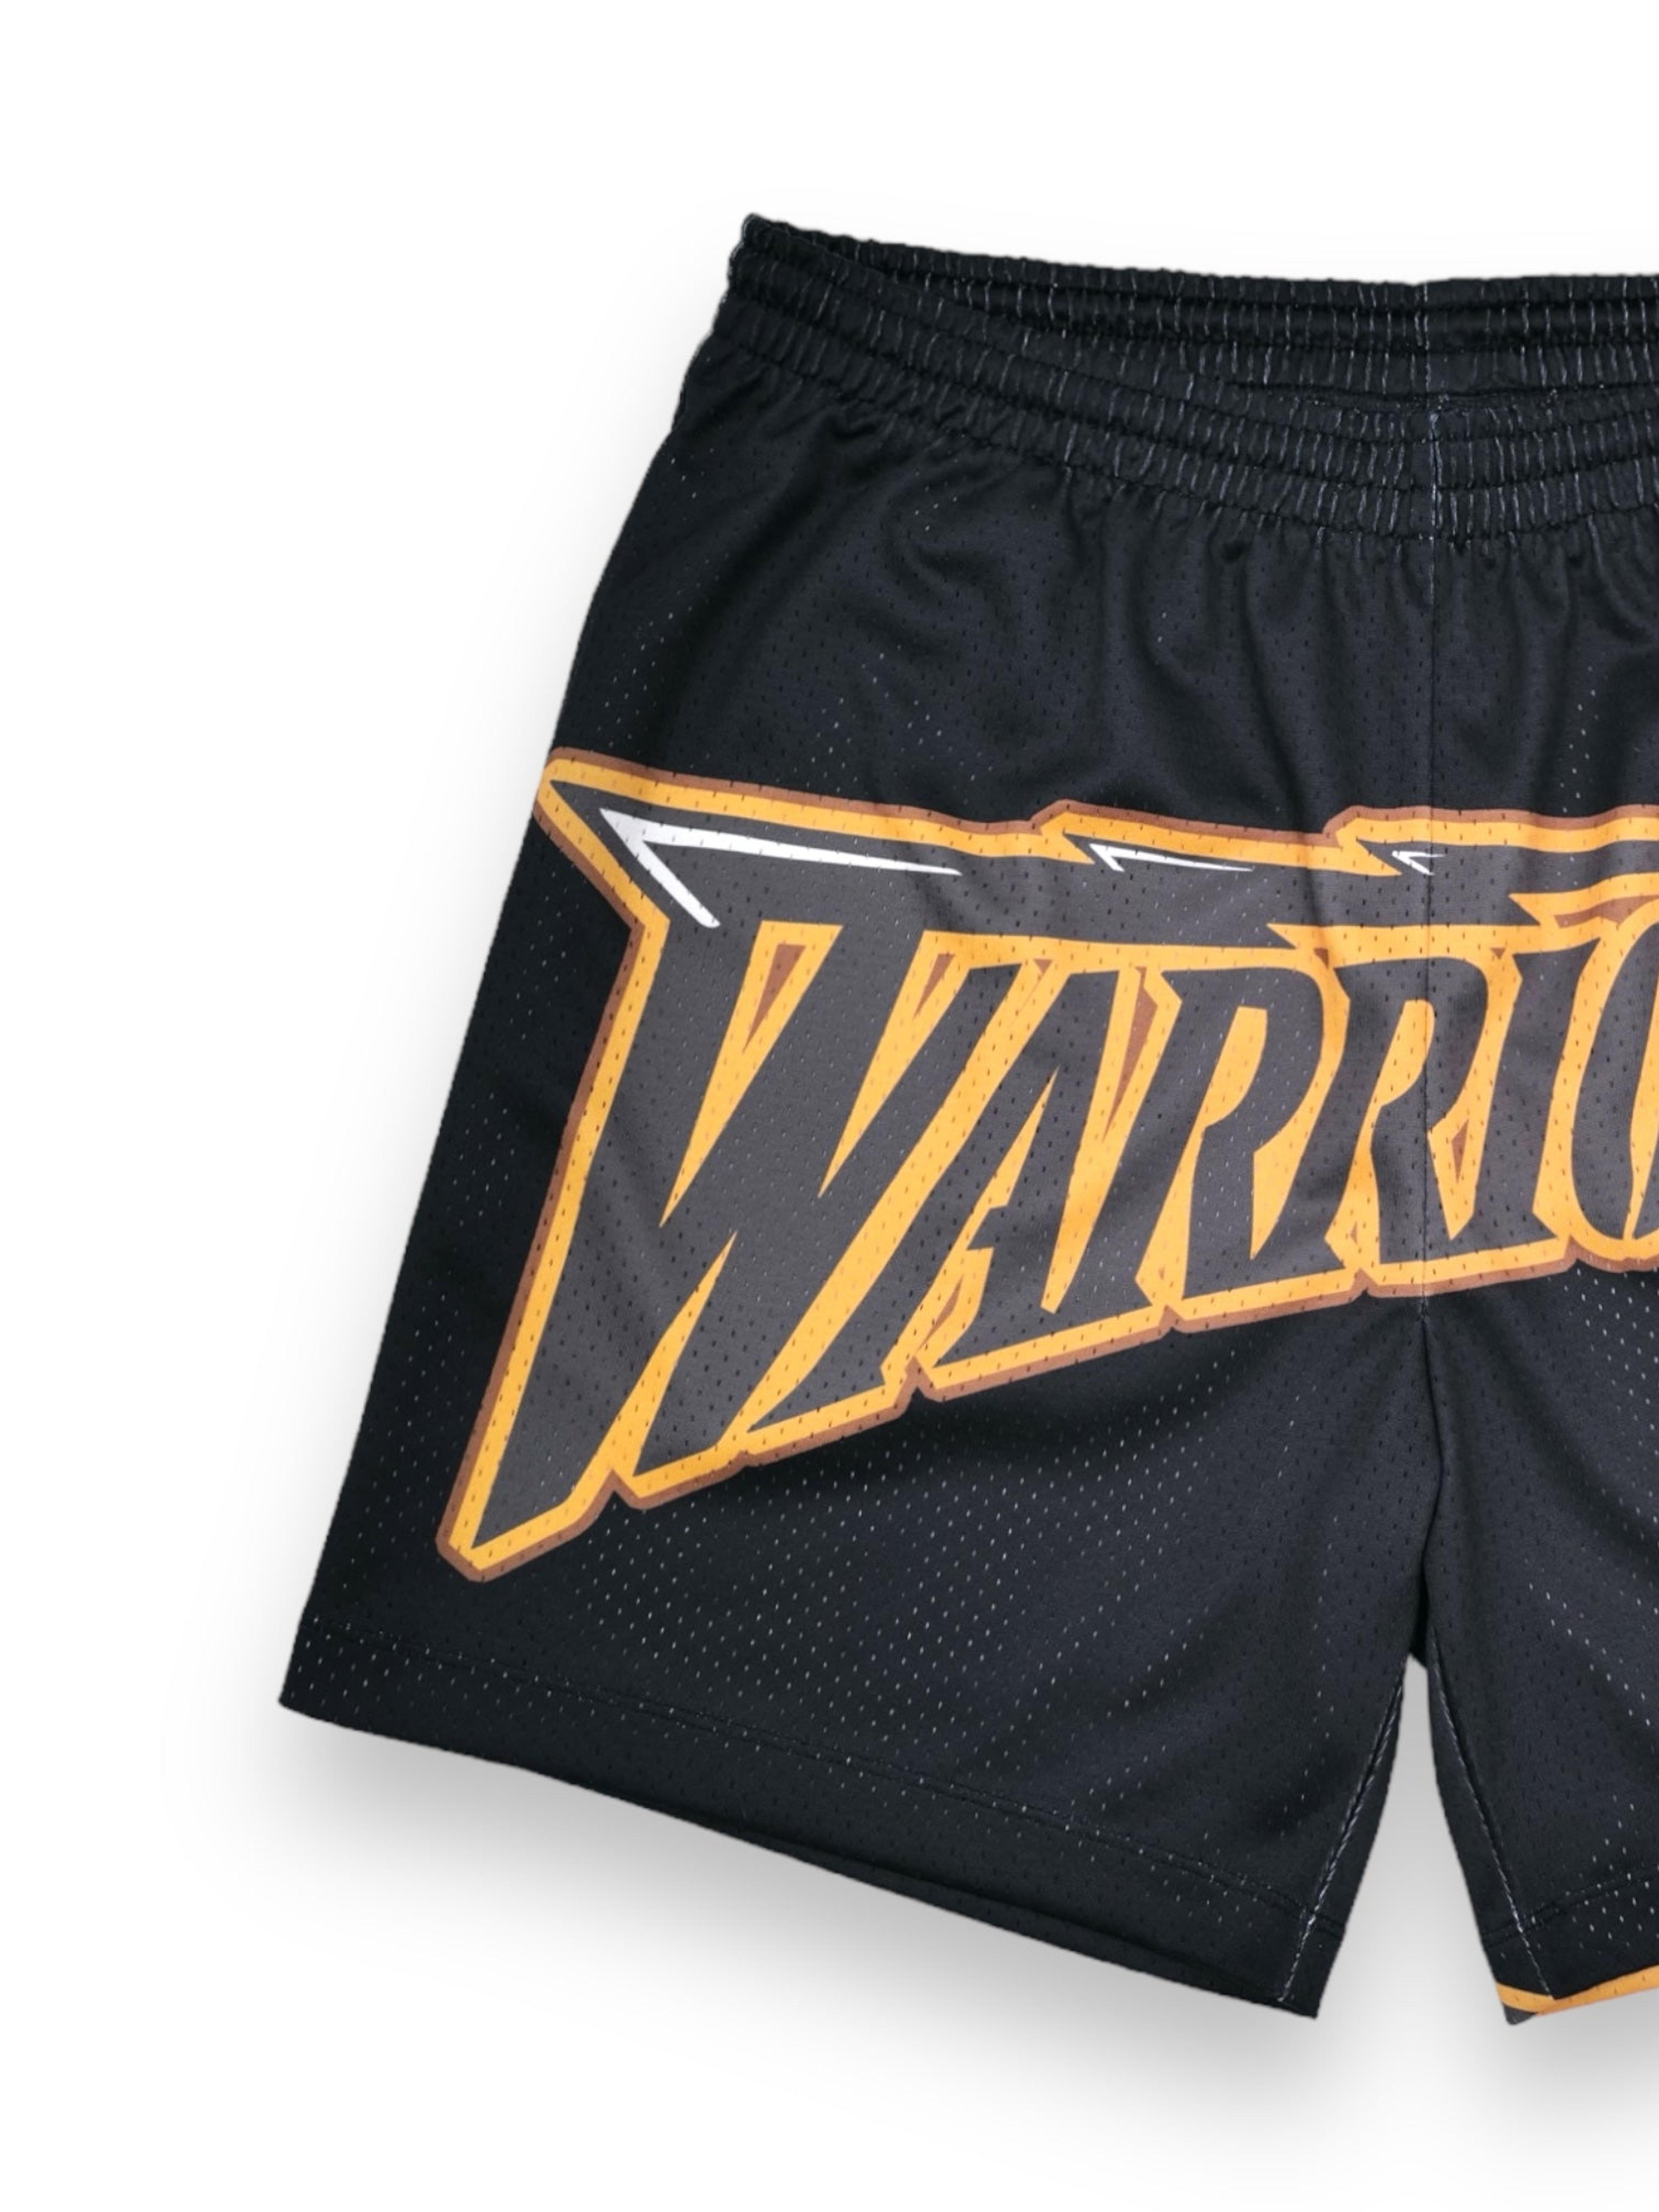 Alternate View 2 of Warriors shorts